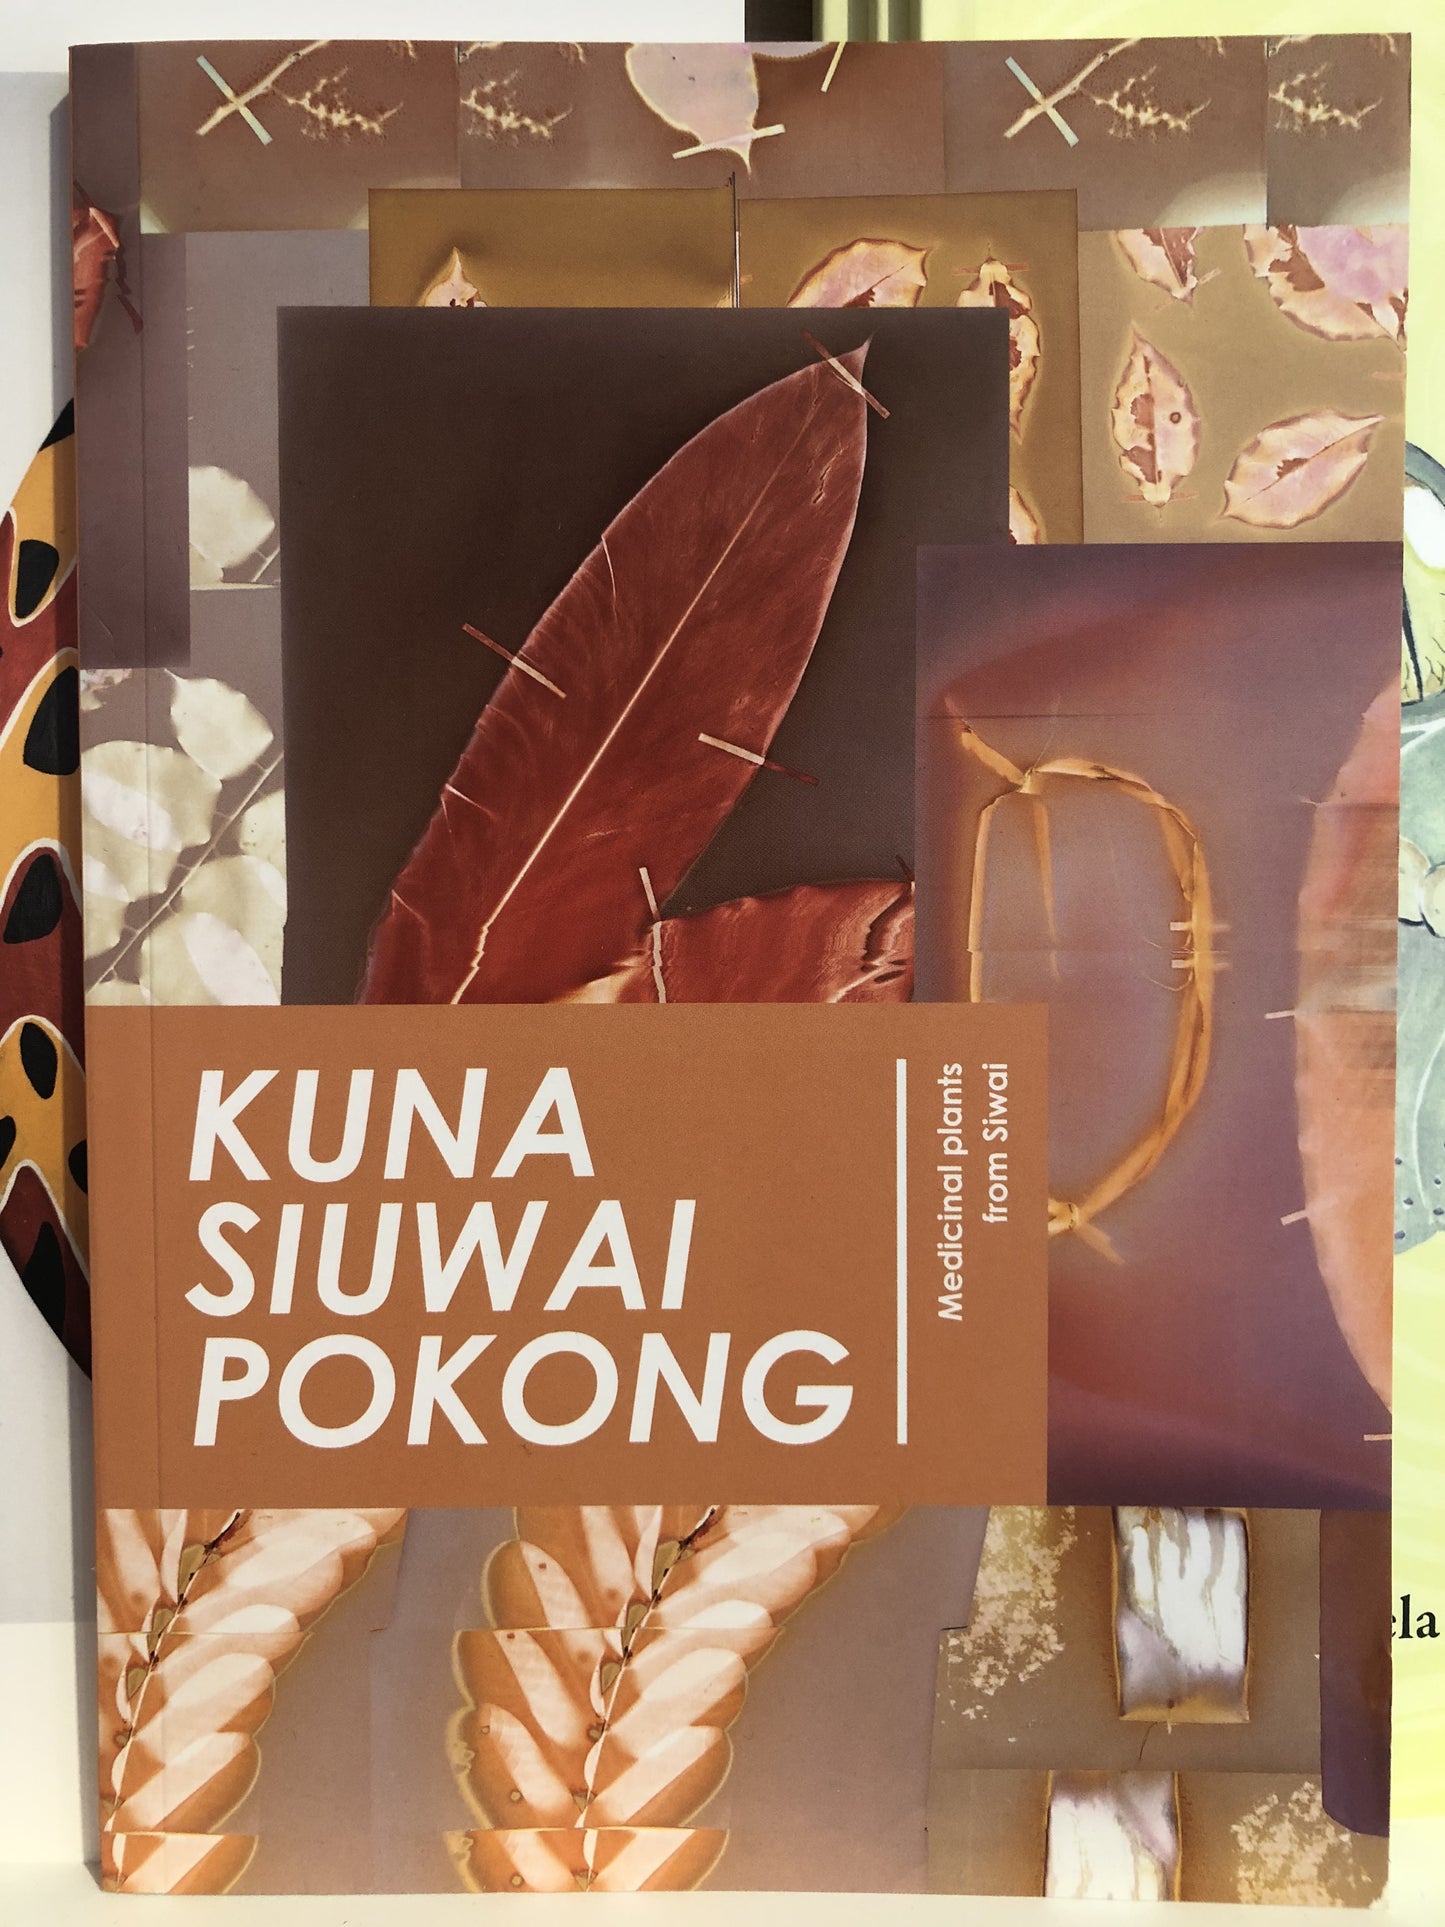 ALEX DAWIA | 'Kuna Siuwai Pokong'  | A book of Medicinal plants  from Siwai in Papua New Guinea